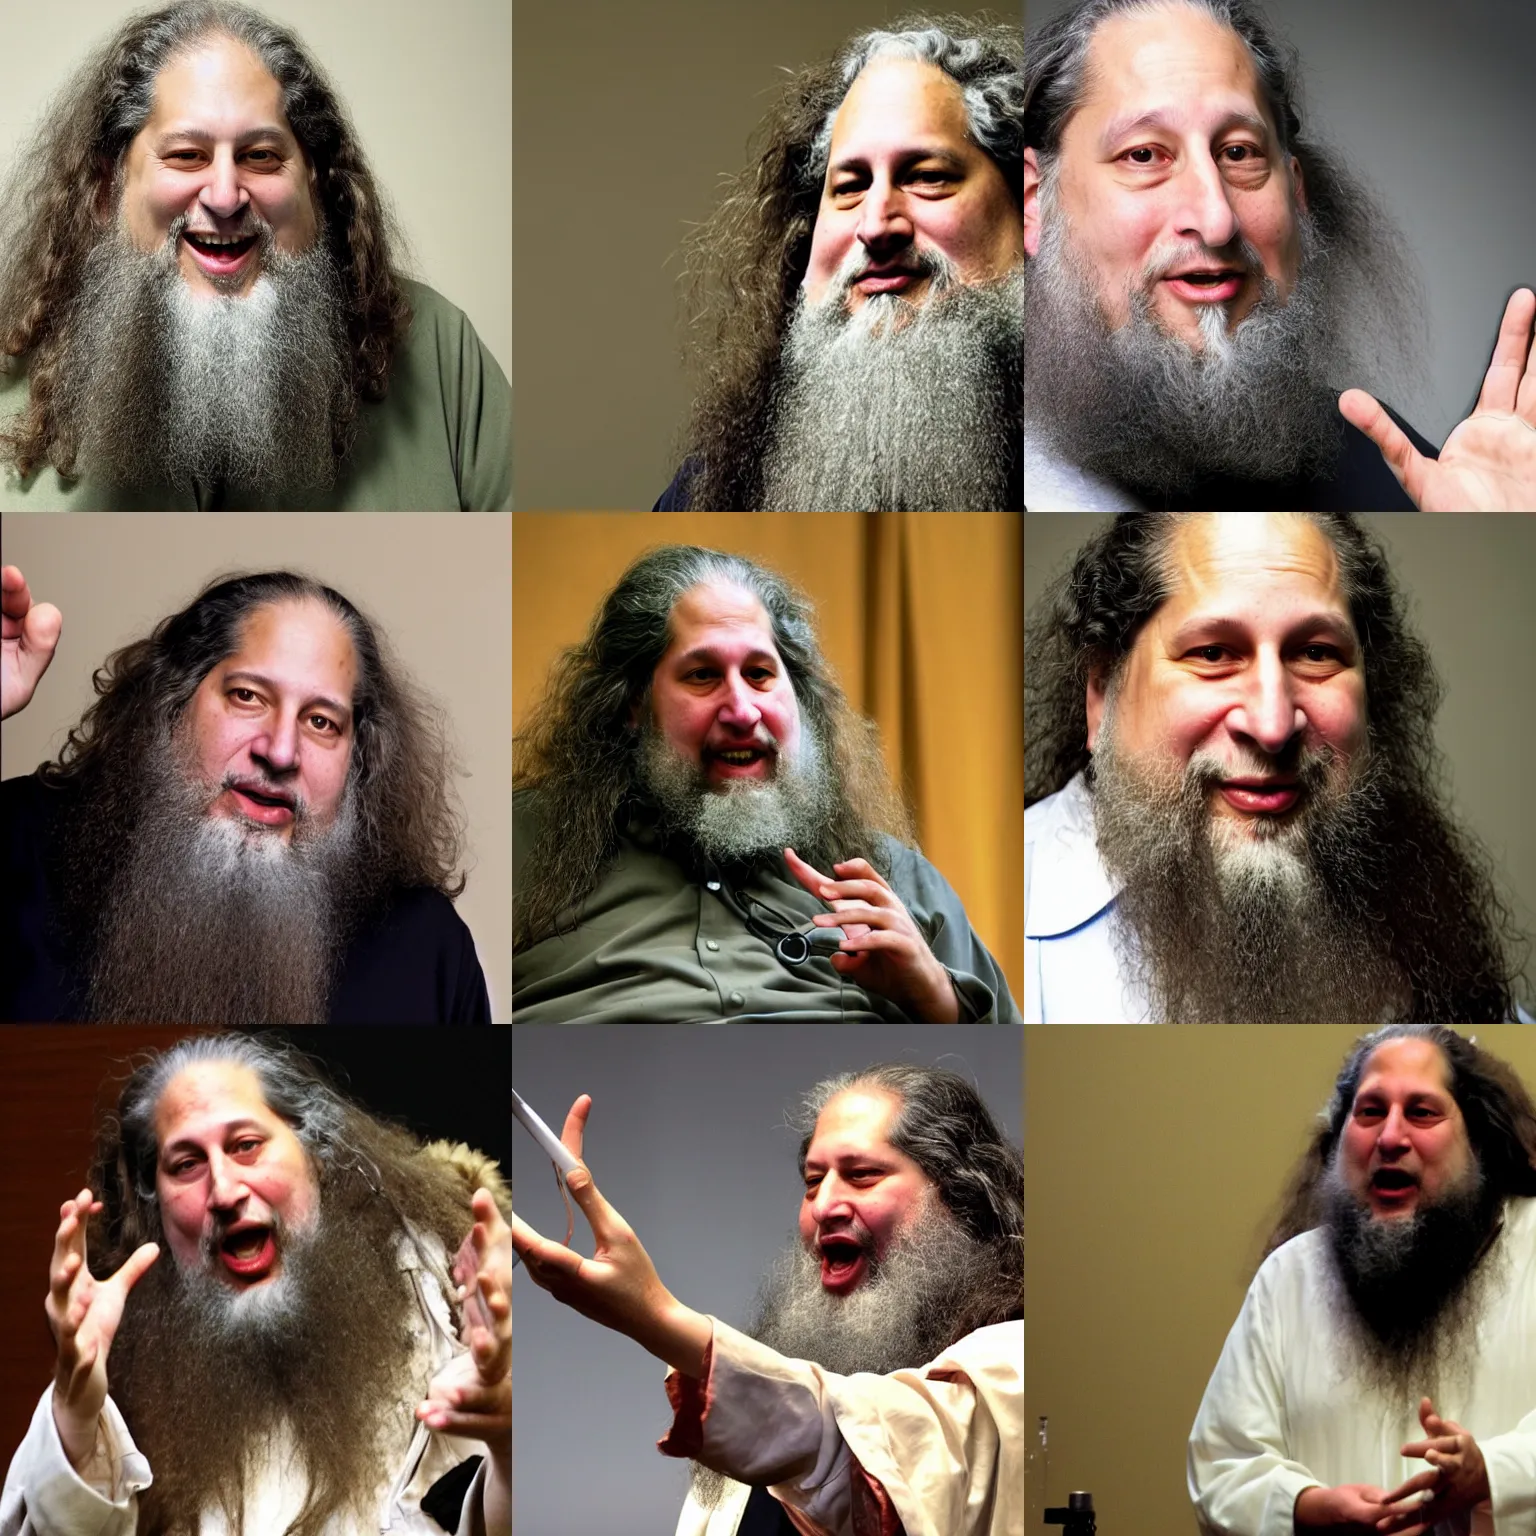 Prompt: <photo quality=hd+>Richard Stallman casting a spell</photo>